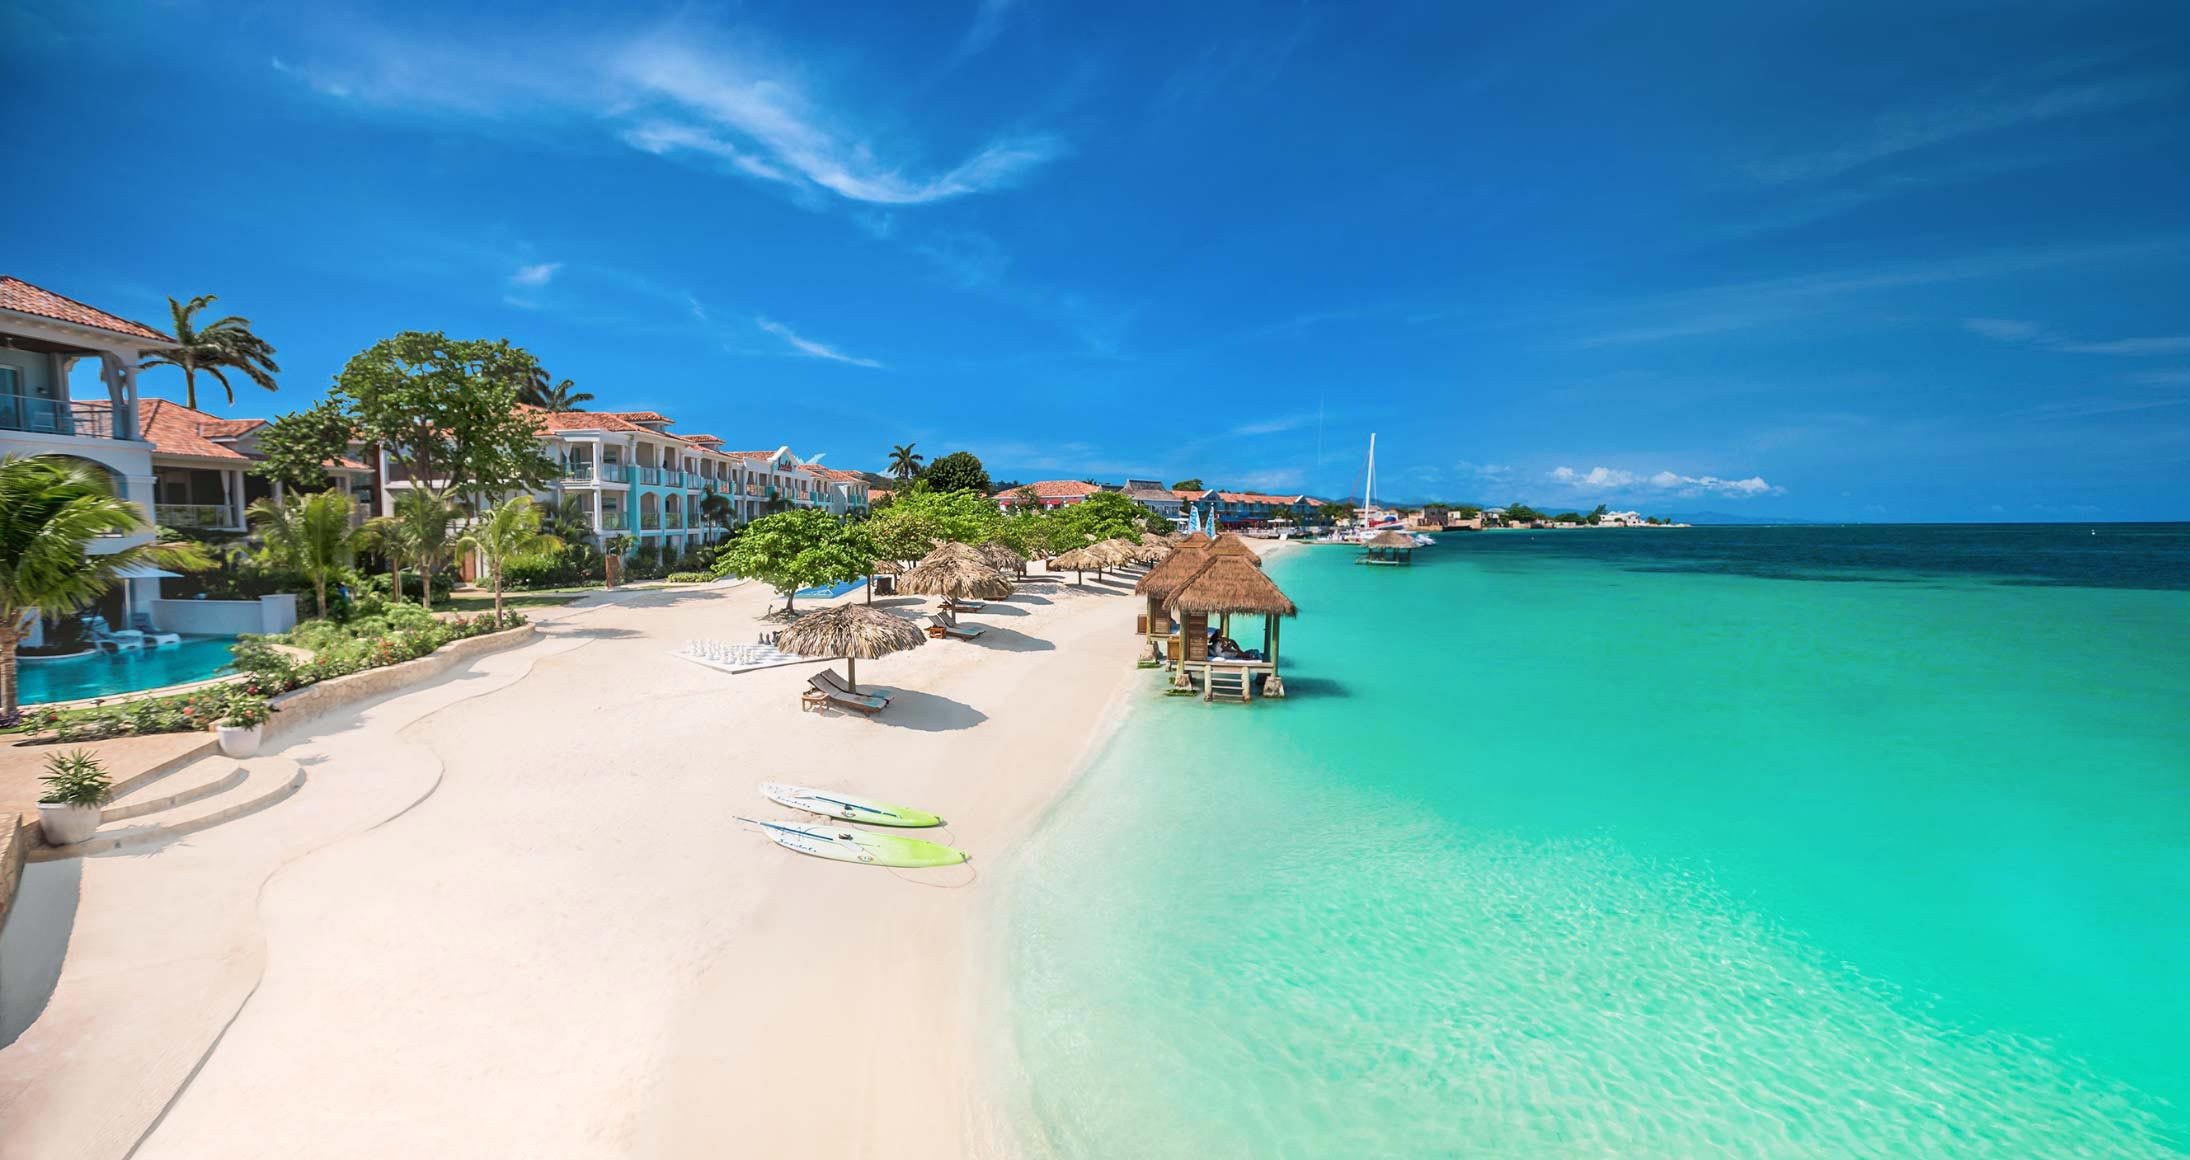 Sandals Montego Bay, All-inclusive resort, Jamaica travels, Travel destination, 2190x1160 HD Desktop